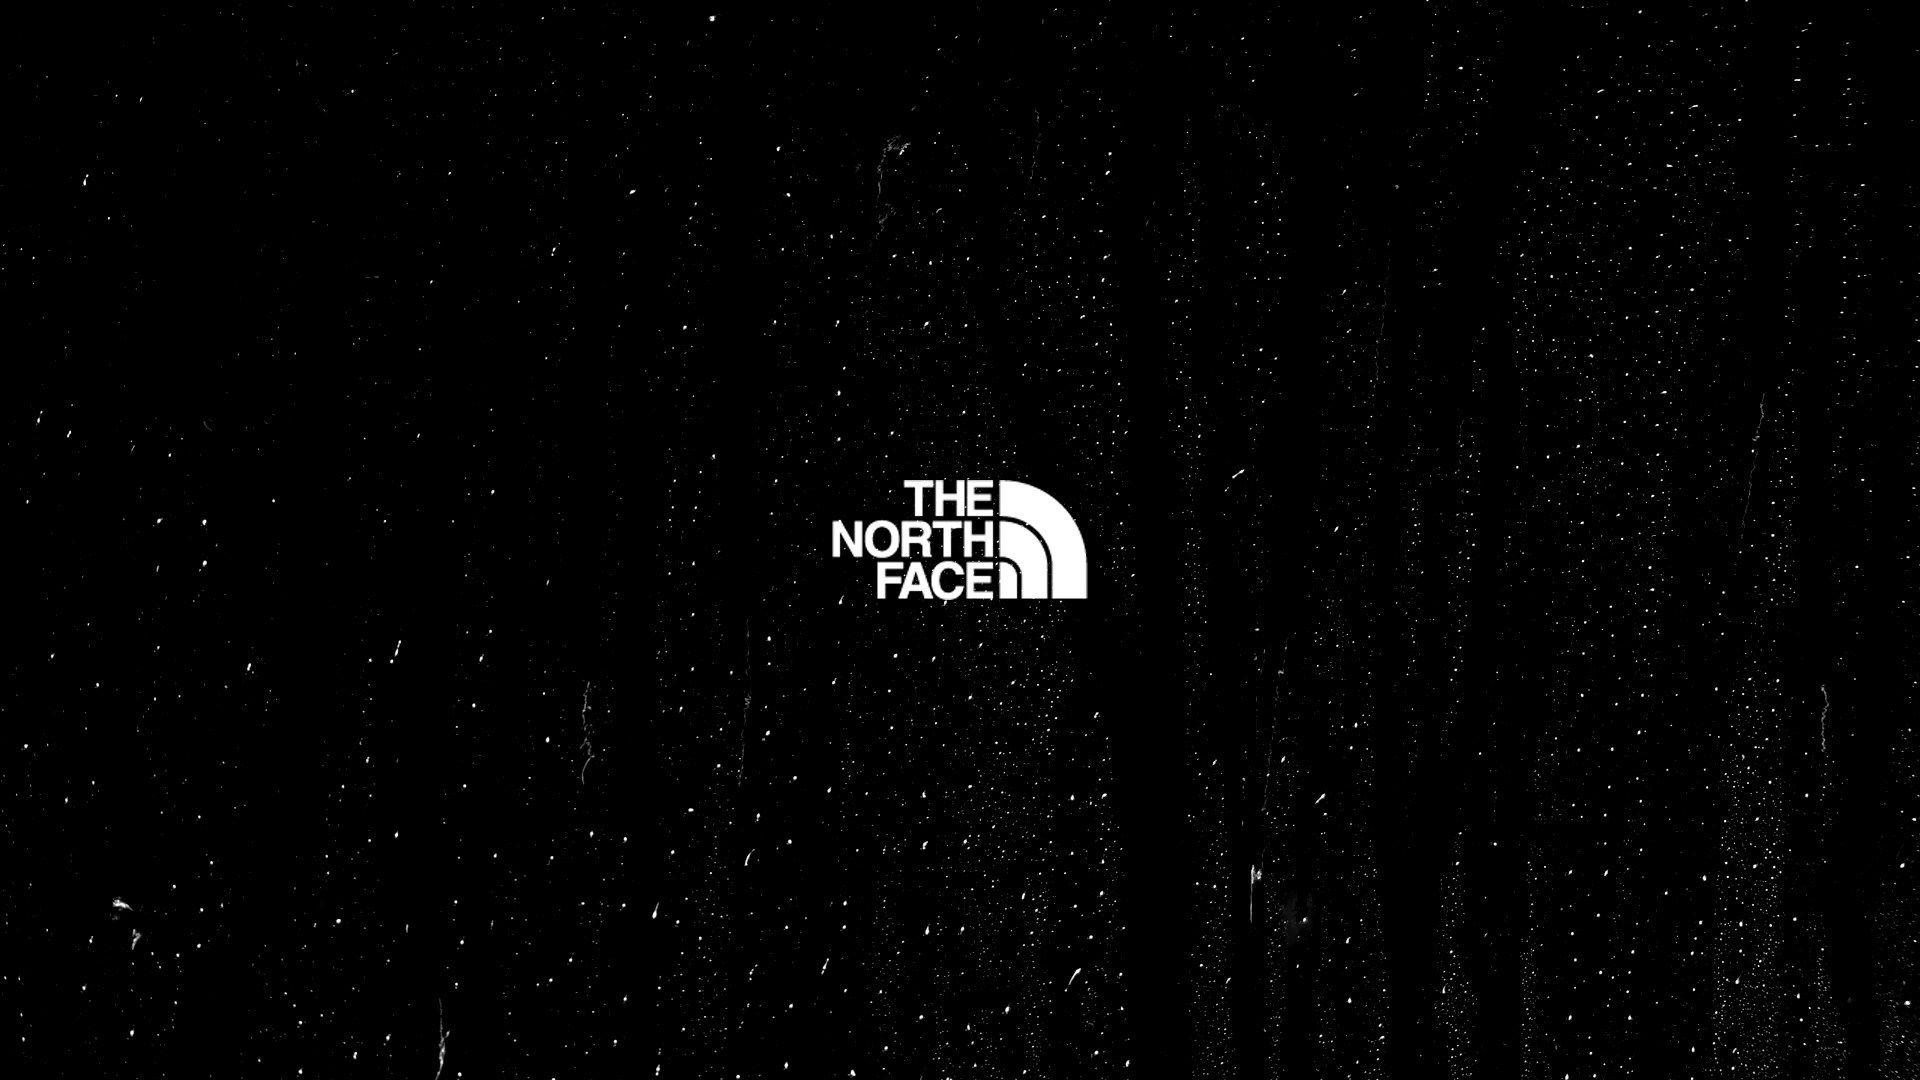 The North Face 北面TNF1996美版羽绒服全方位展示 - 知乎